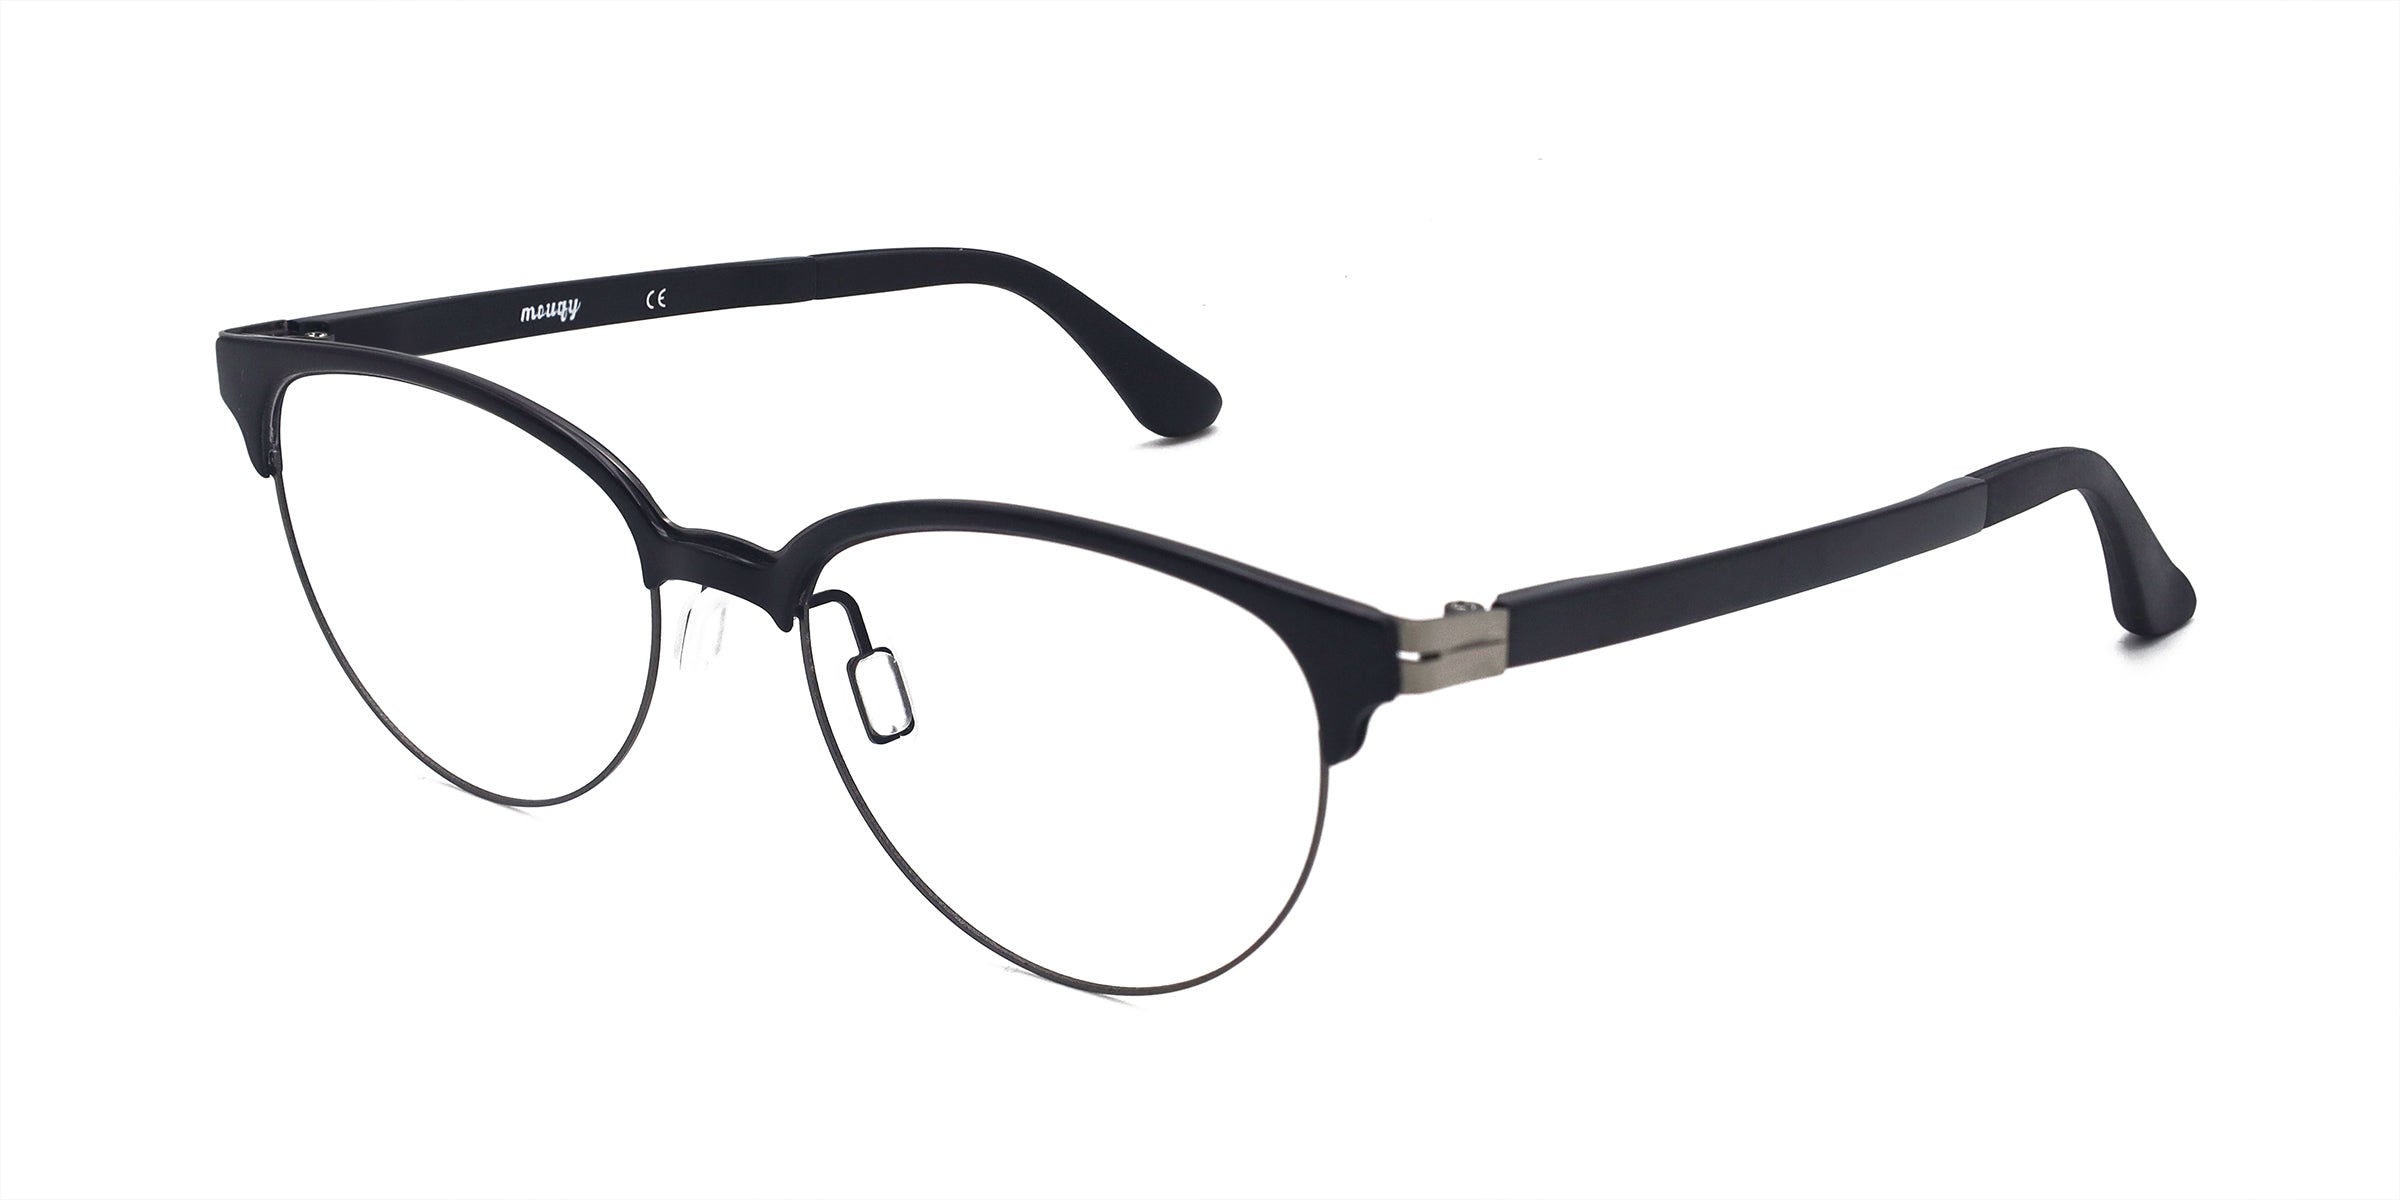 victor oval black eyeglasses frames angled view